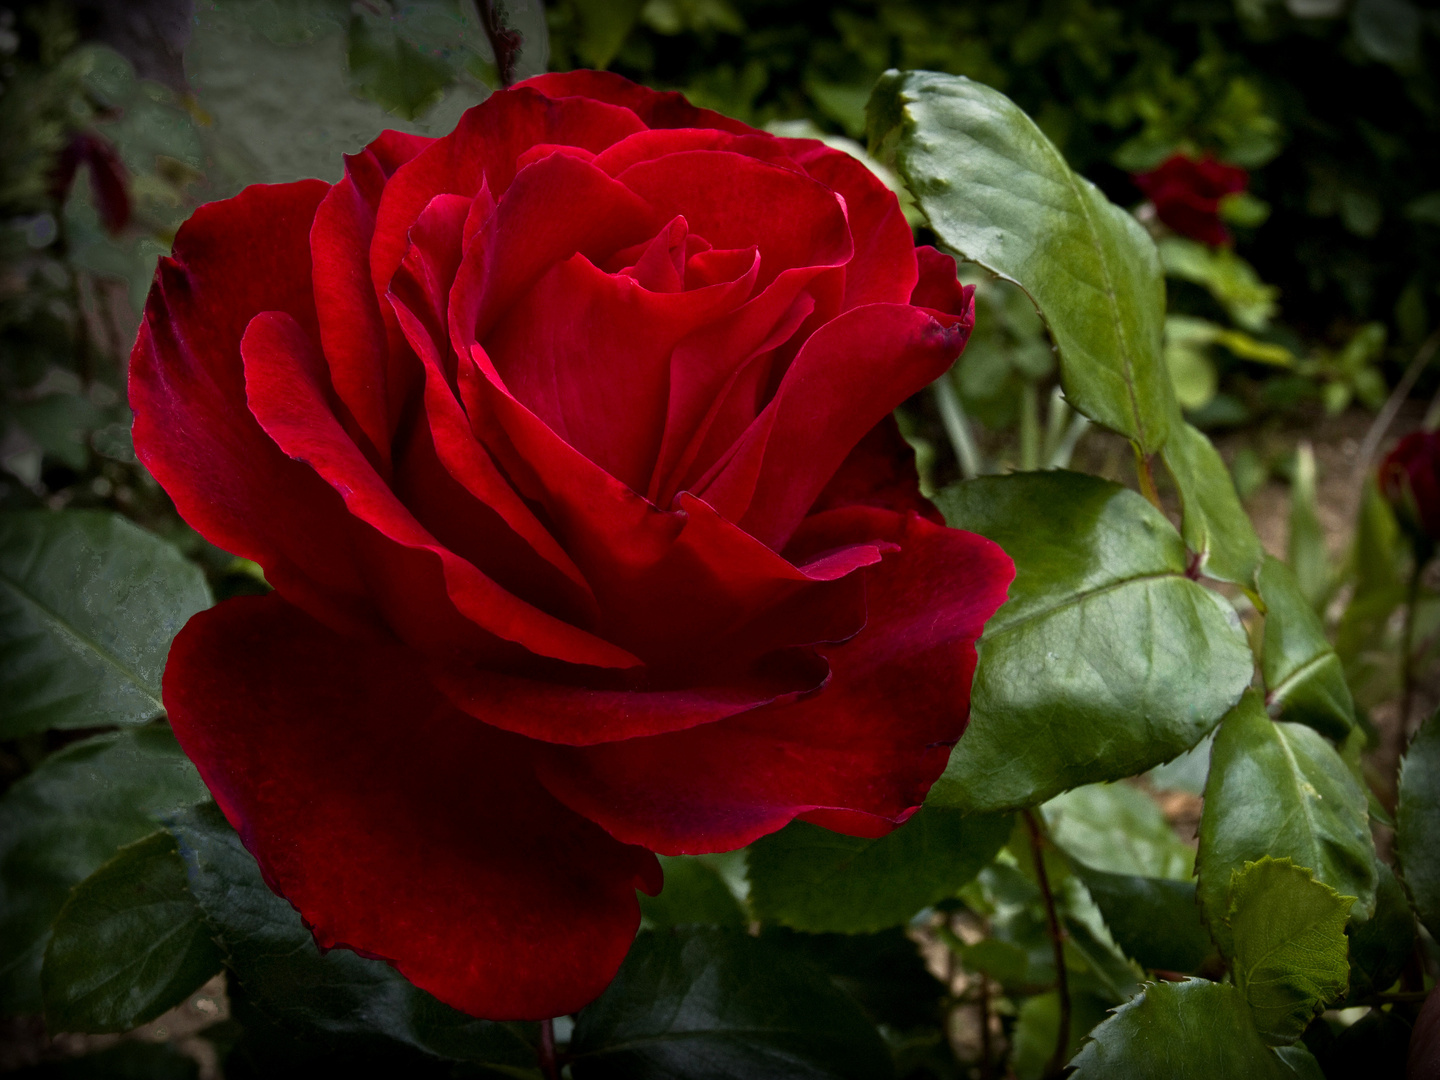 La rose rouge du lundi